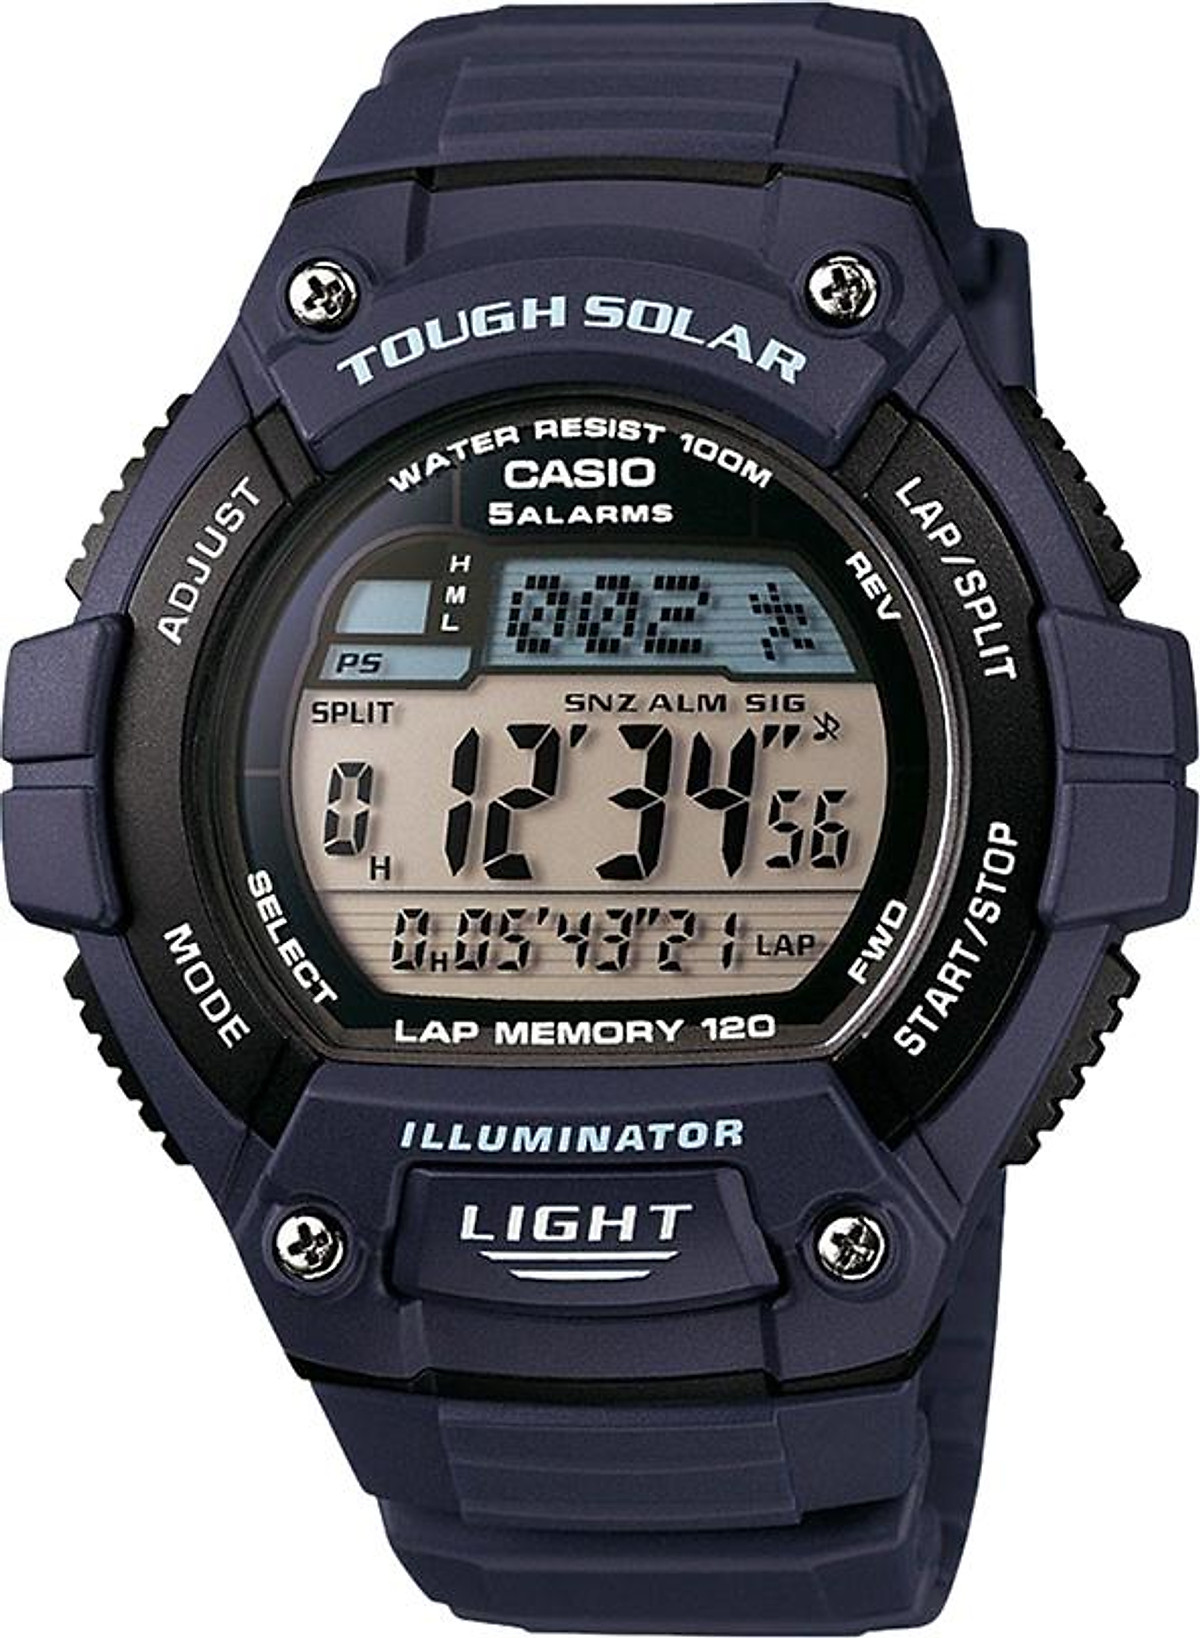 Khám phá đồng hồ Casio W-S220-2AVDF